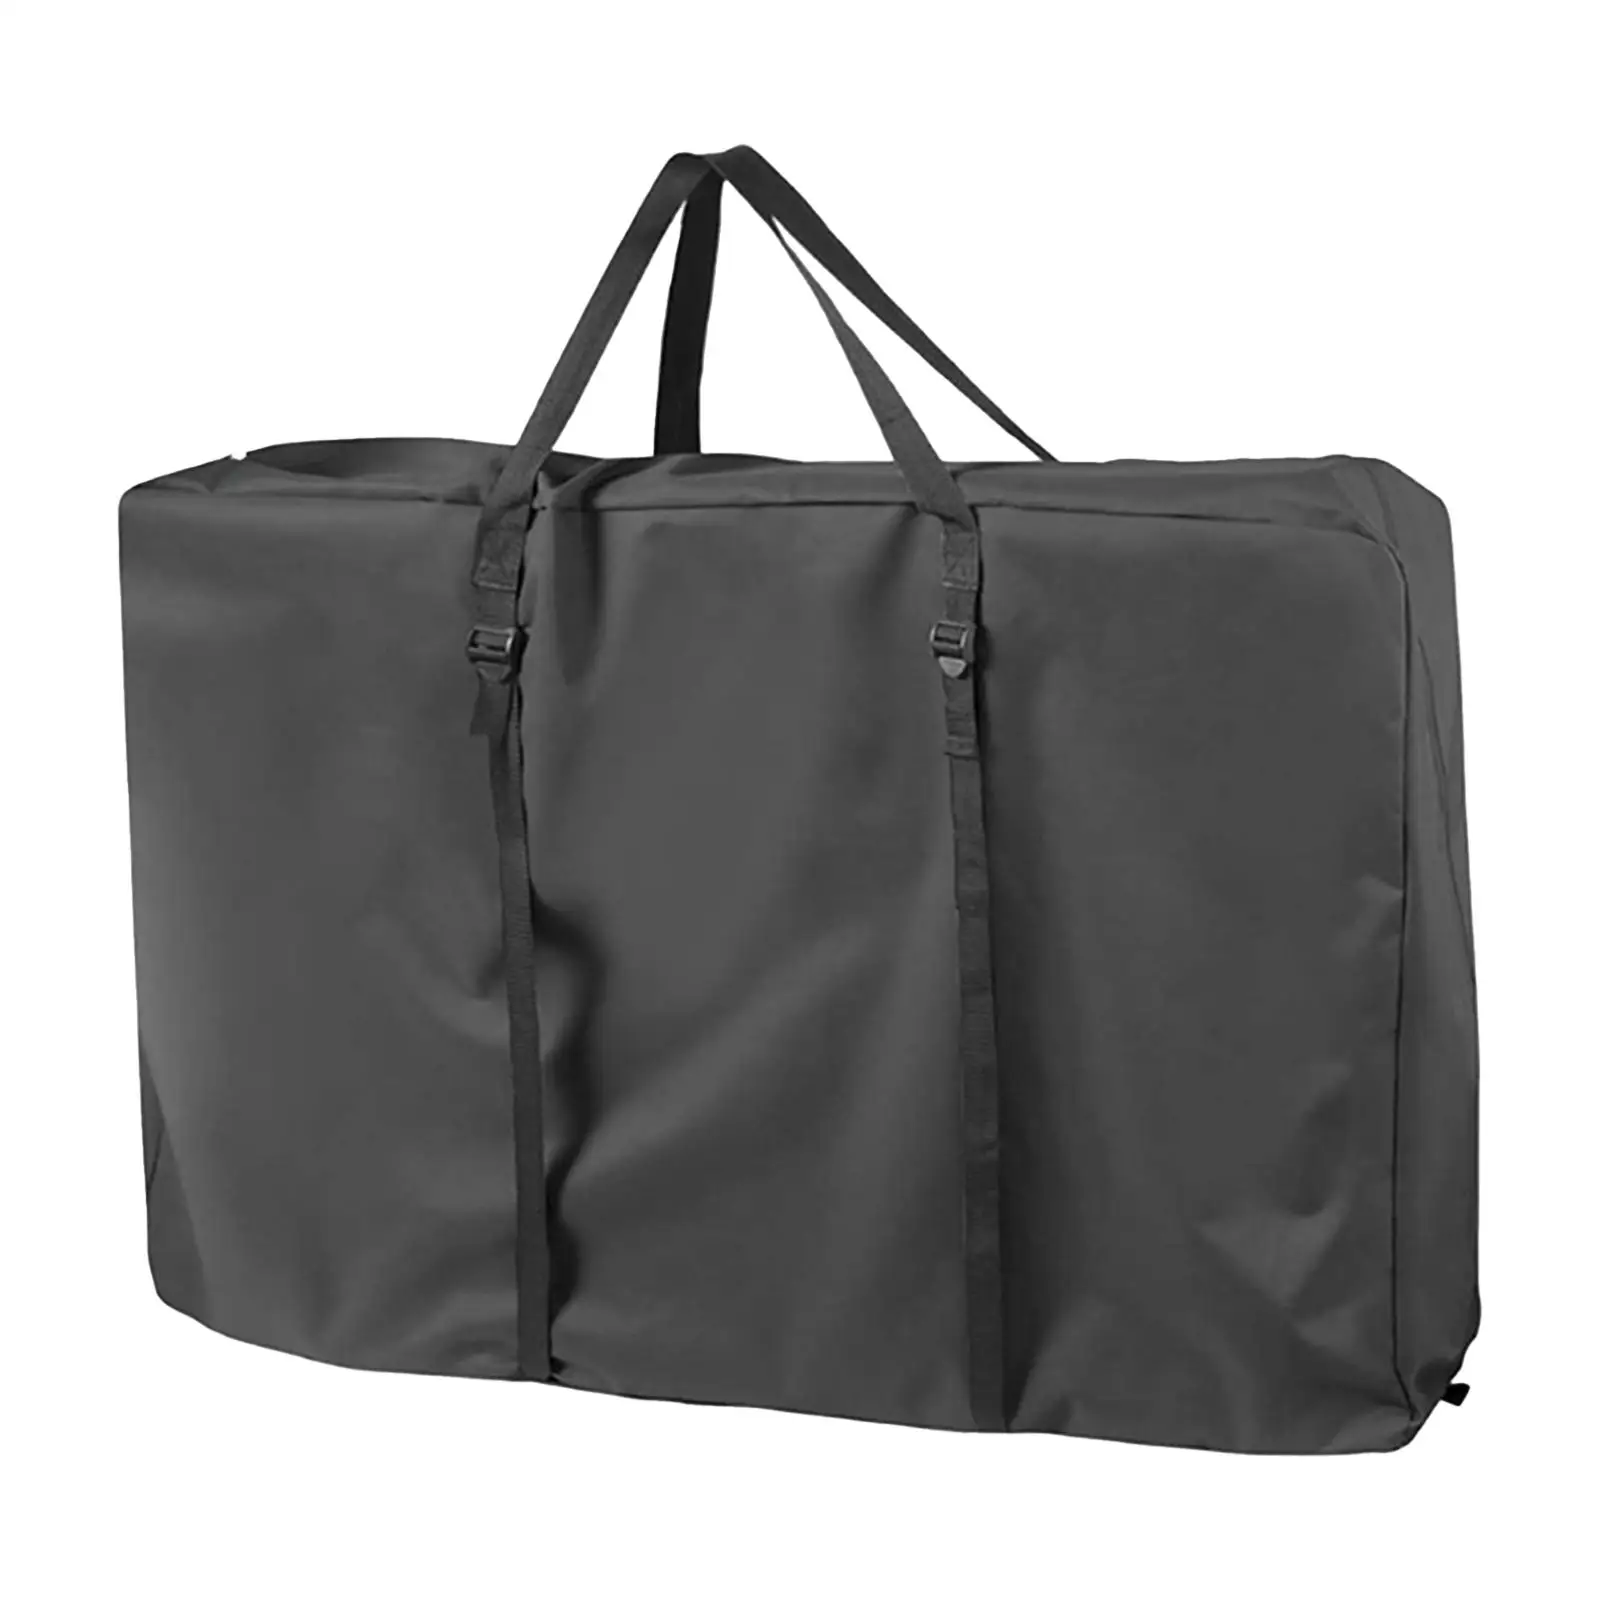 Bag for Wheelchair Travel Organizer Gym Fitness for Transport Bag for Folding Chair Luggage Portable Bike Travel Bag